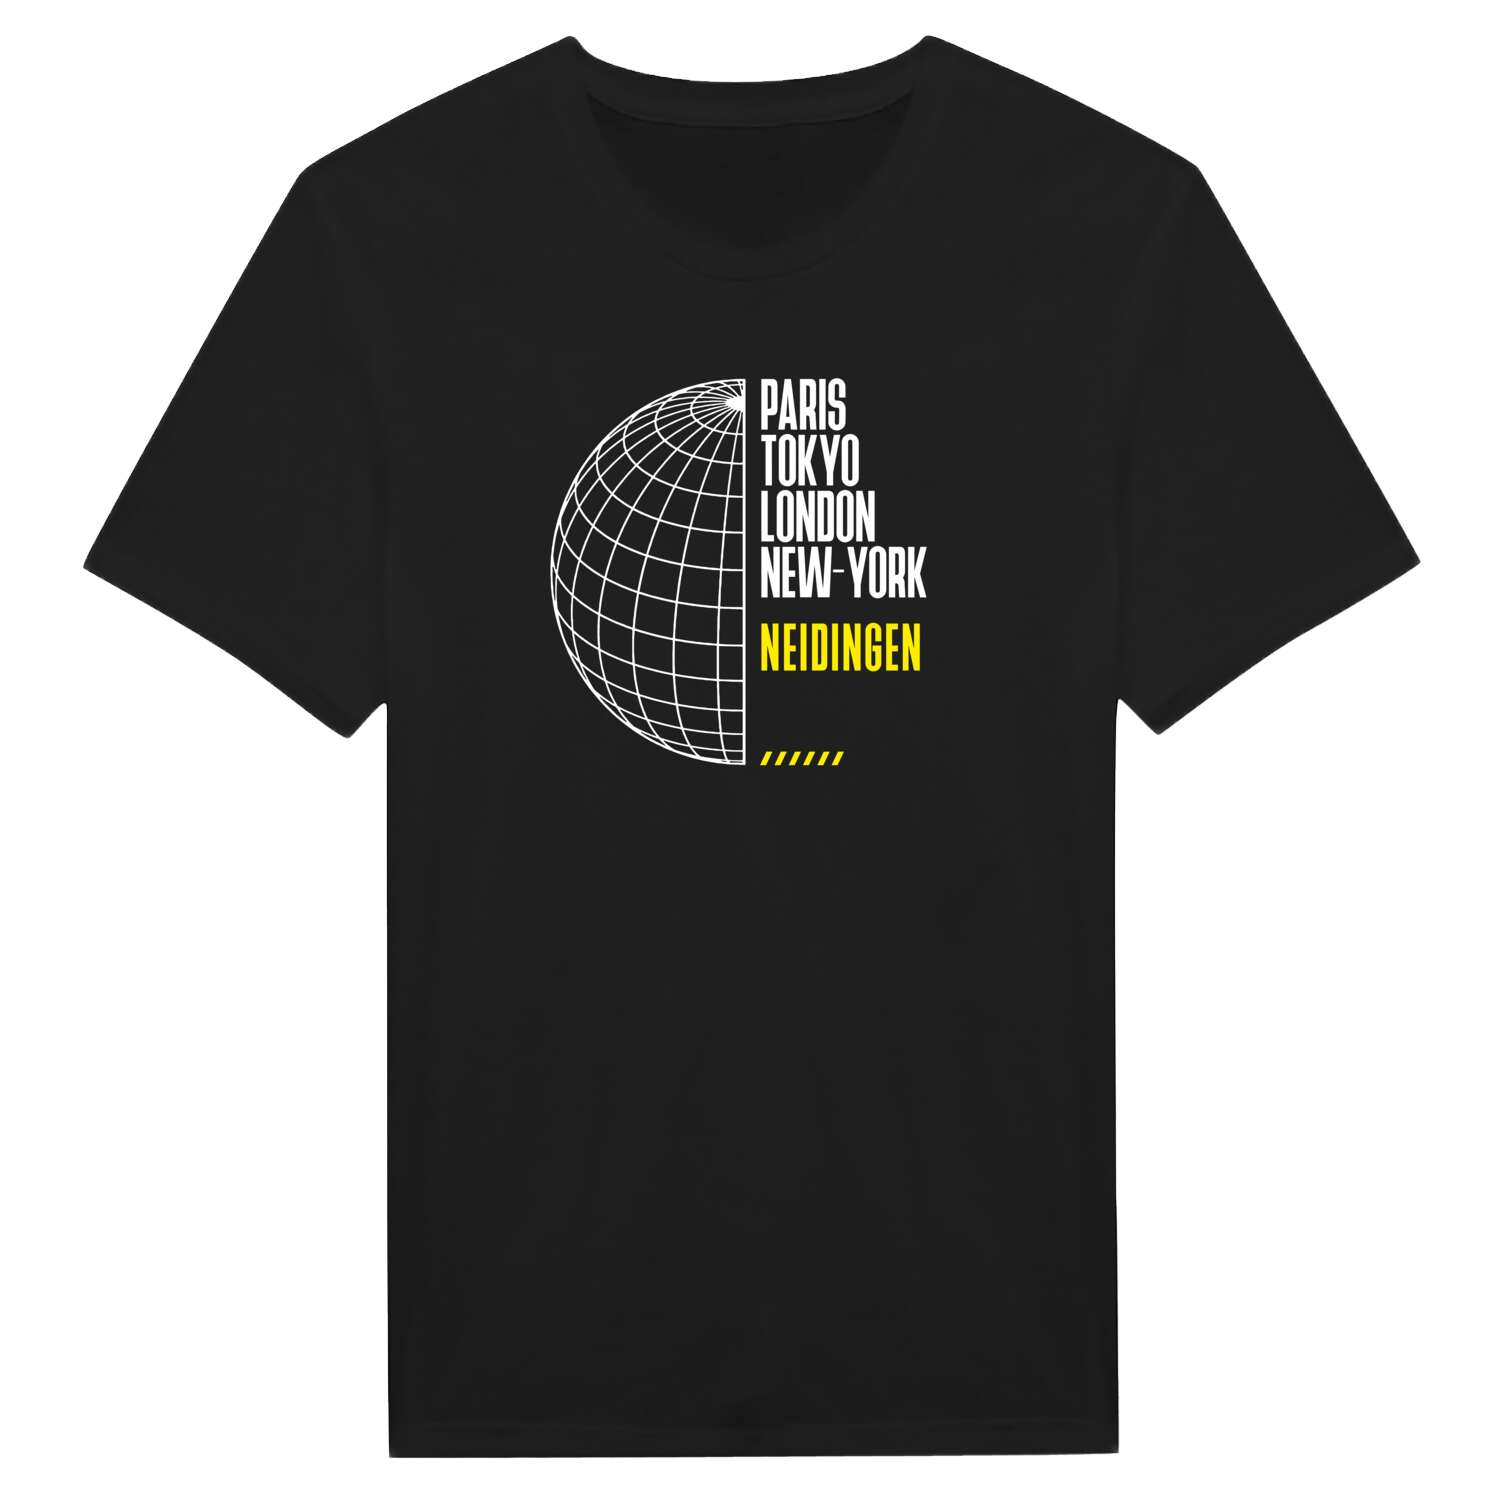 Neidingen T-Shirt »Paris Tokyo London«